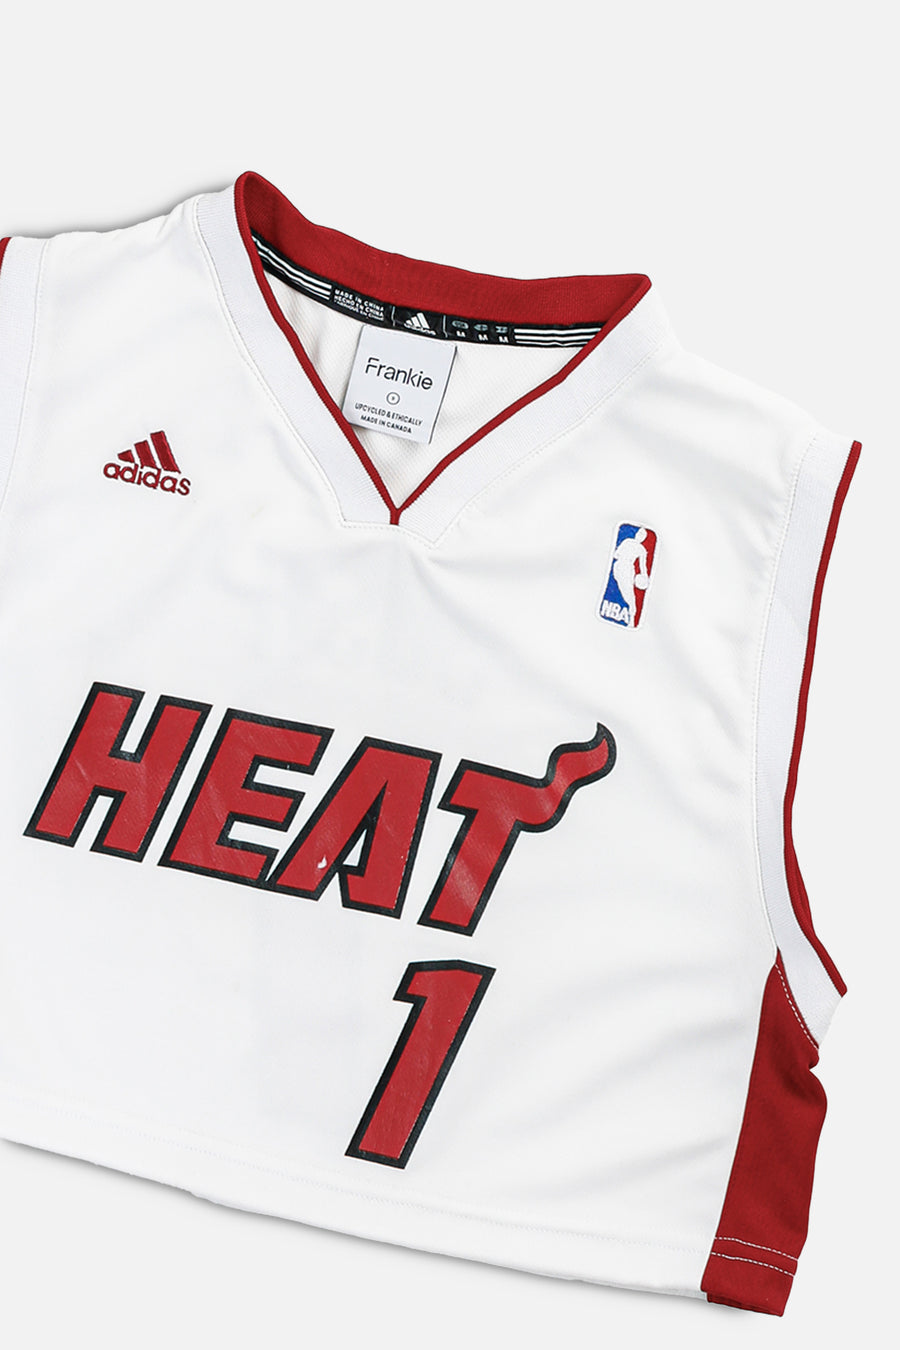 Rework Miami Heat NBA Crop Jersey - S